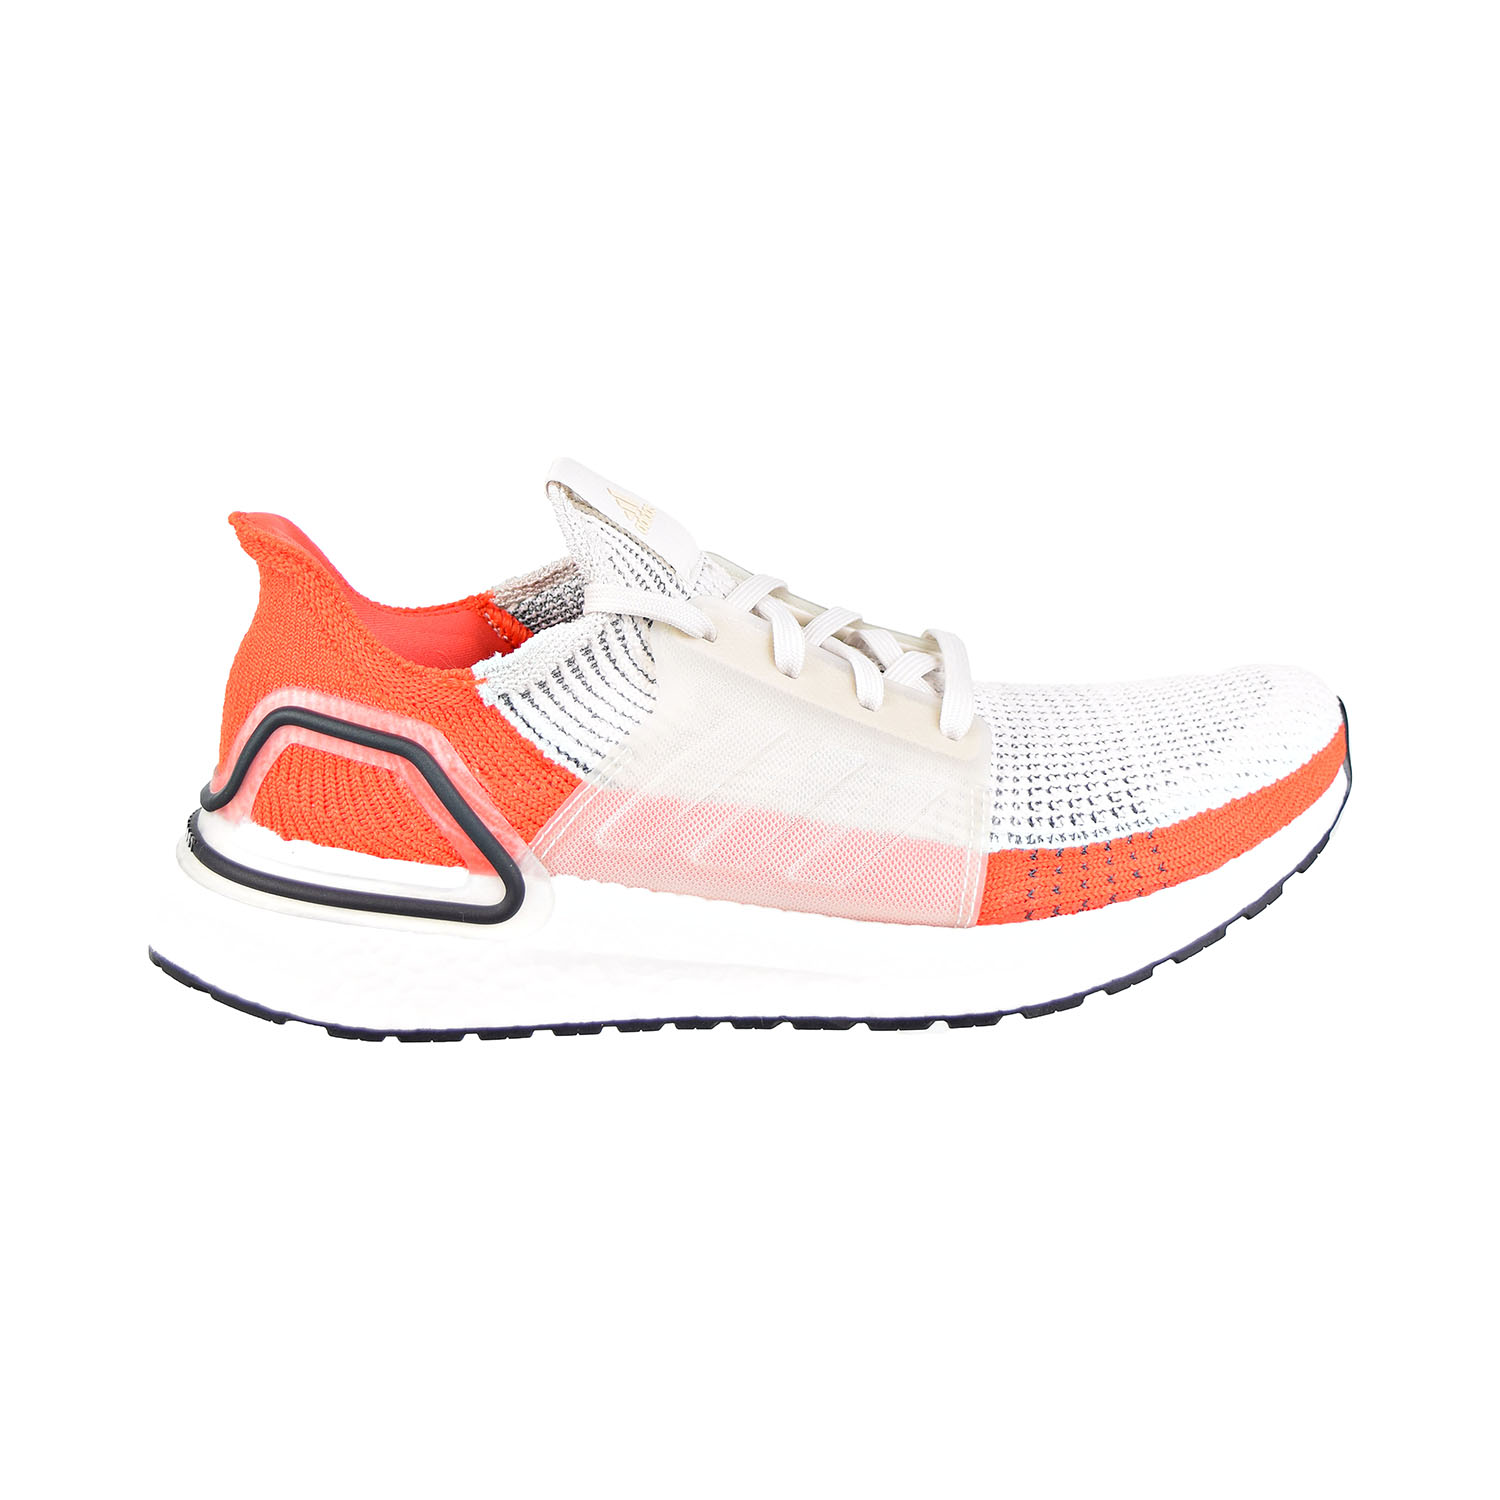 Shoes Raw White-Active Orange F35245 